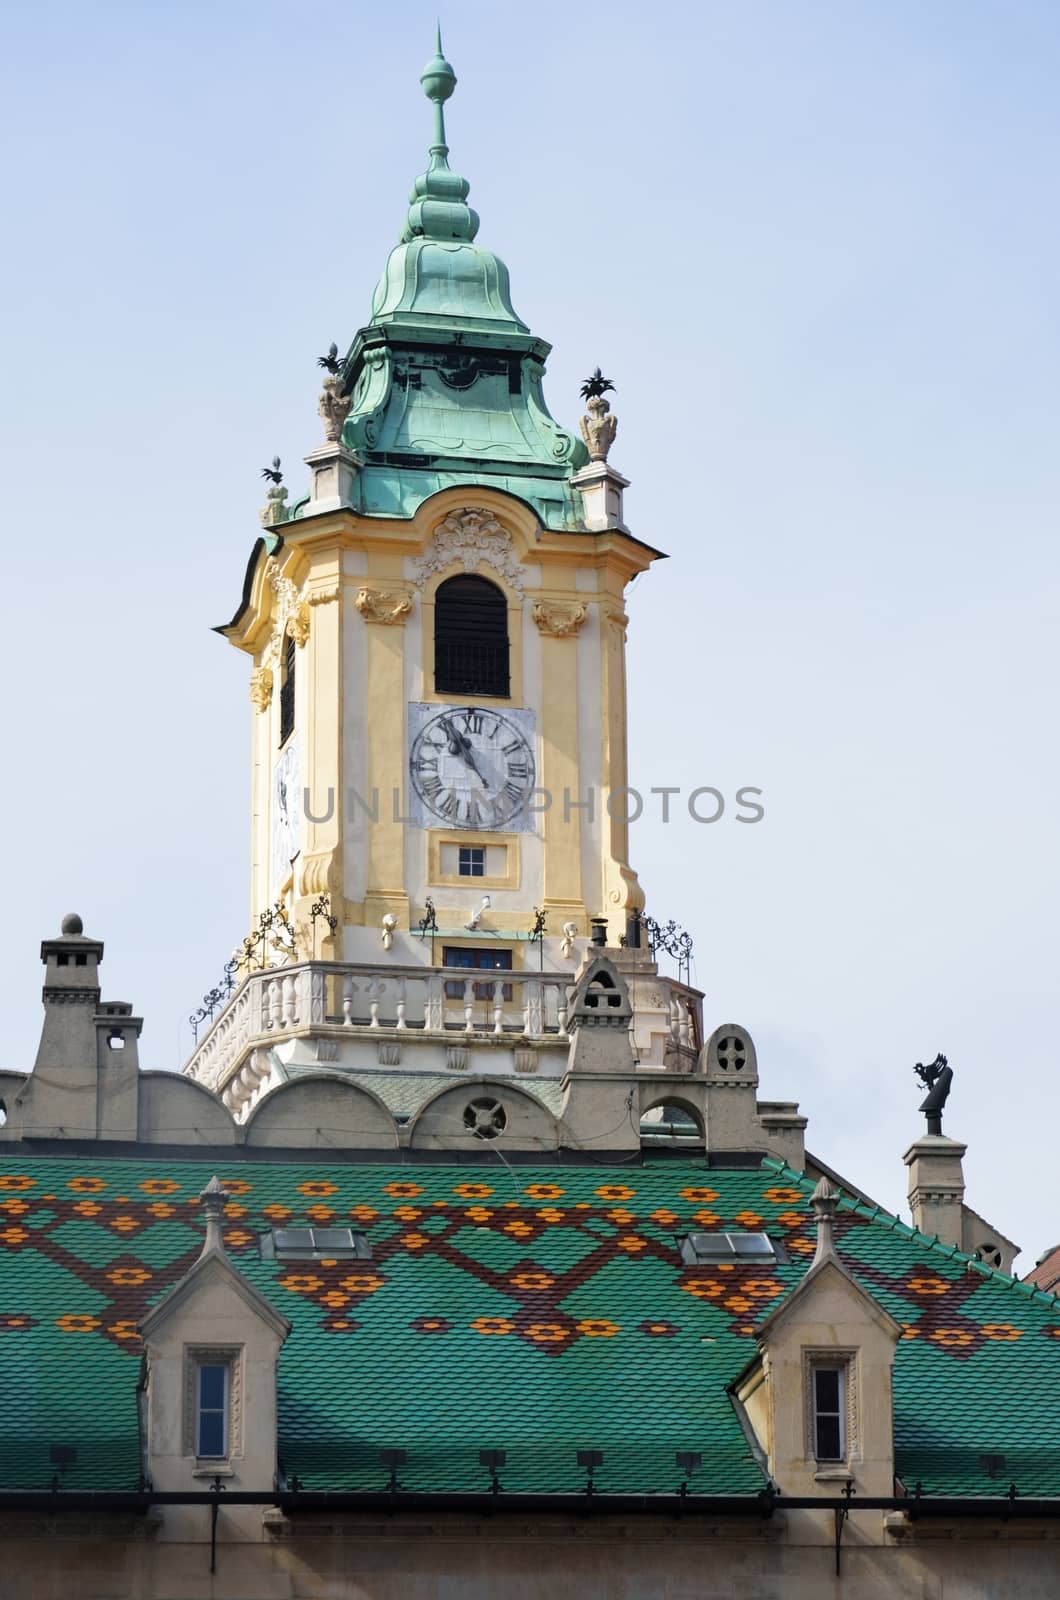  Bratislava Town Hall roof by pauws99